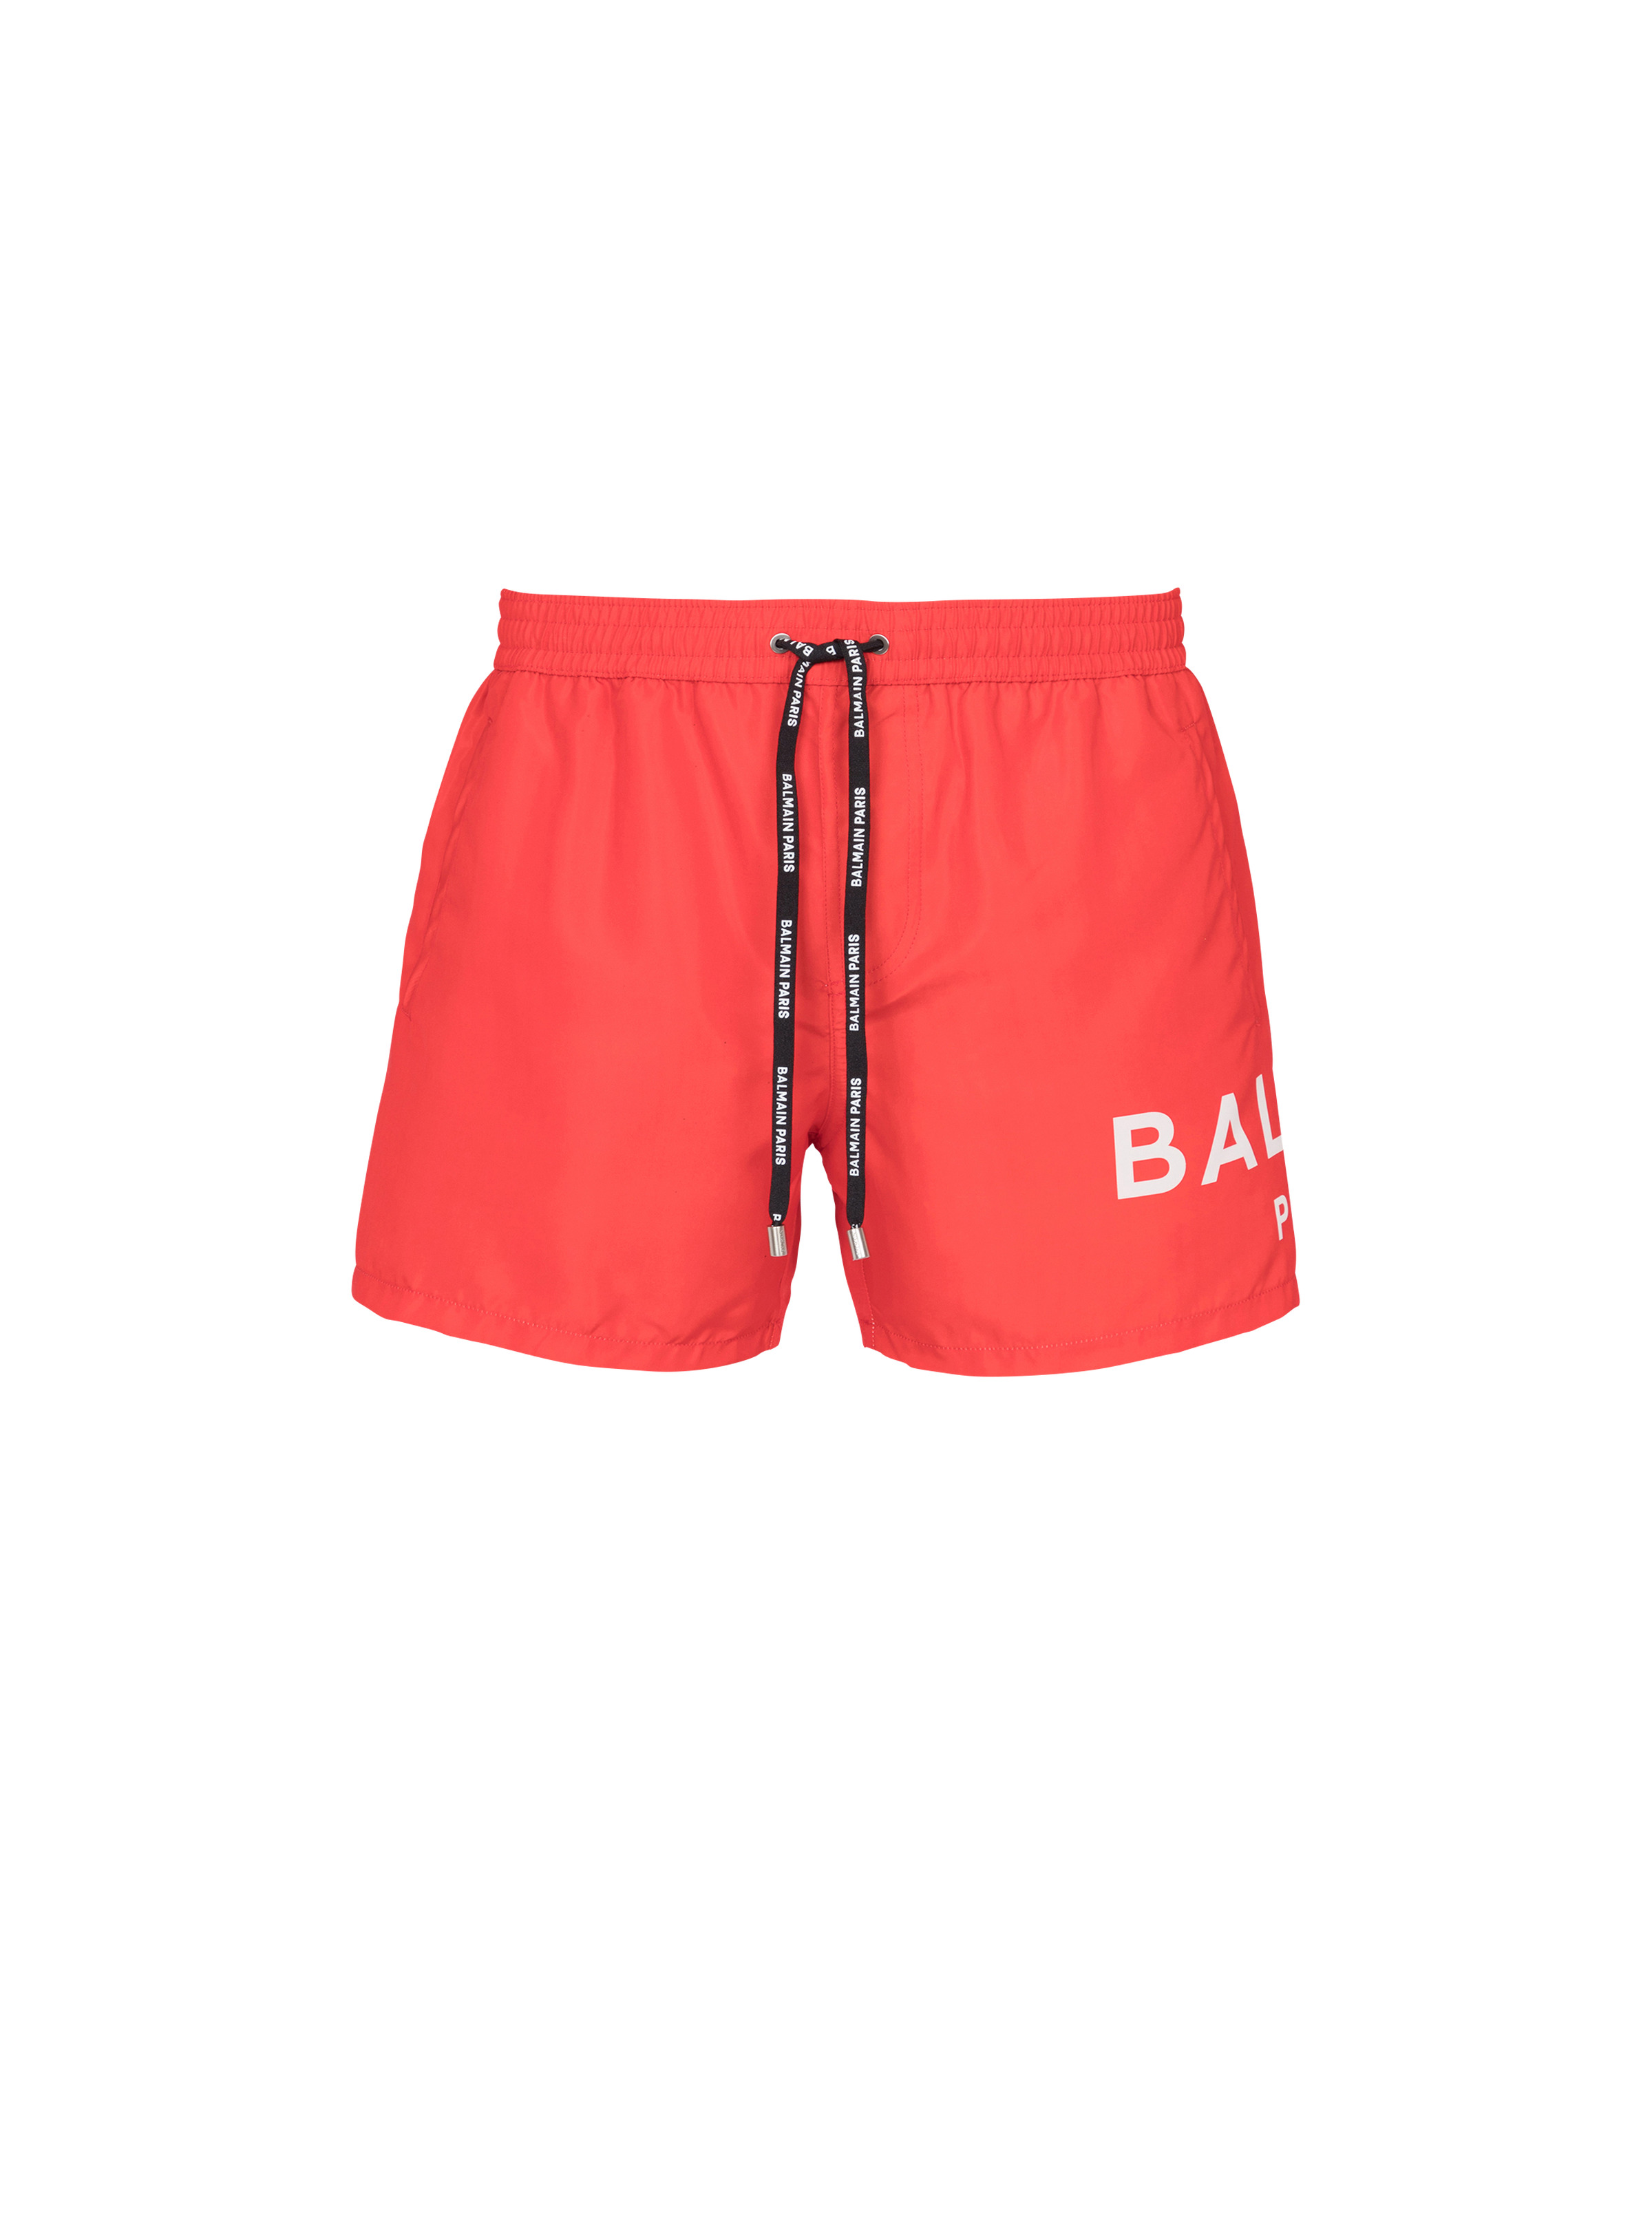 Balmain logo swim shorts - 1